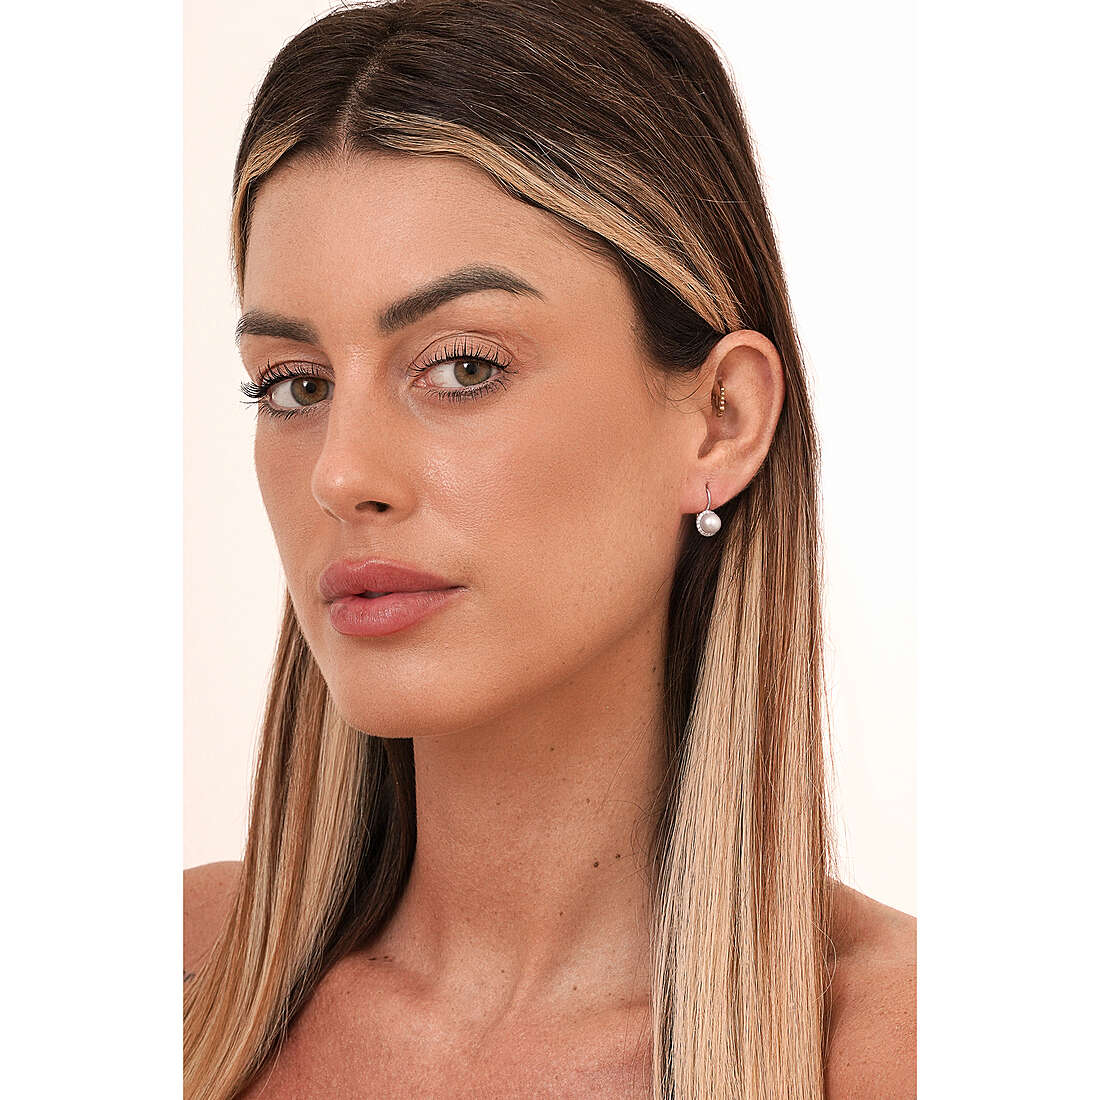 GioiaPura earrings Oro 375 woman GP9-S173615 wearing